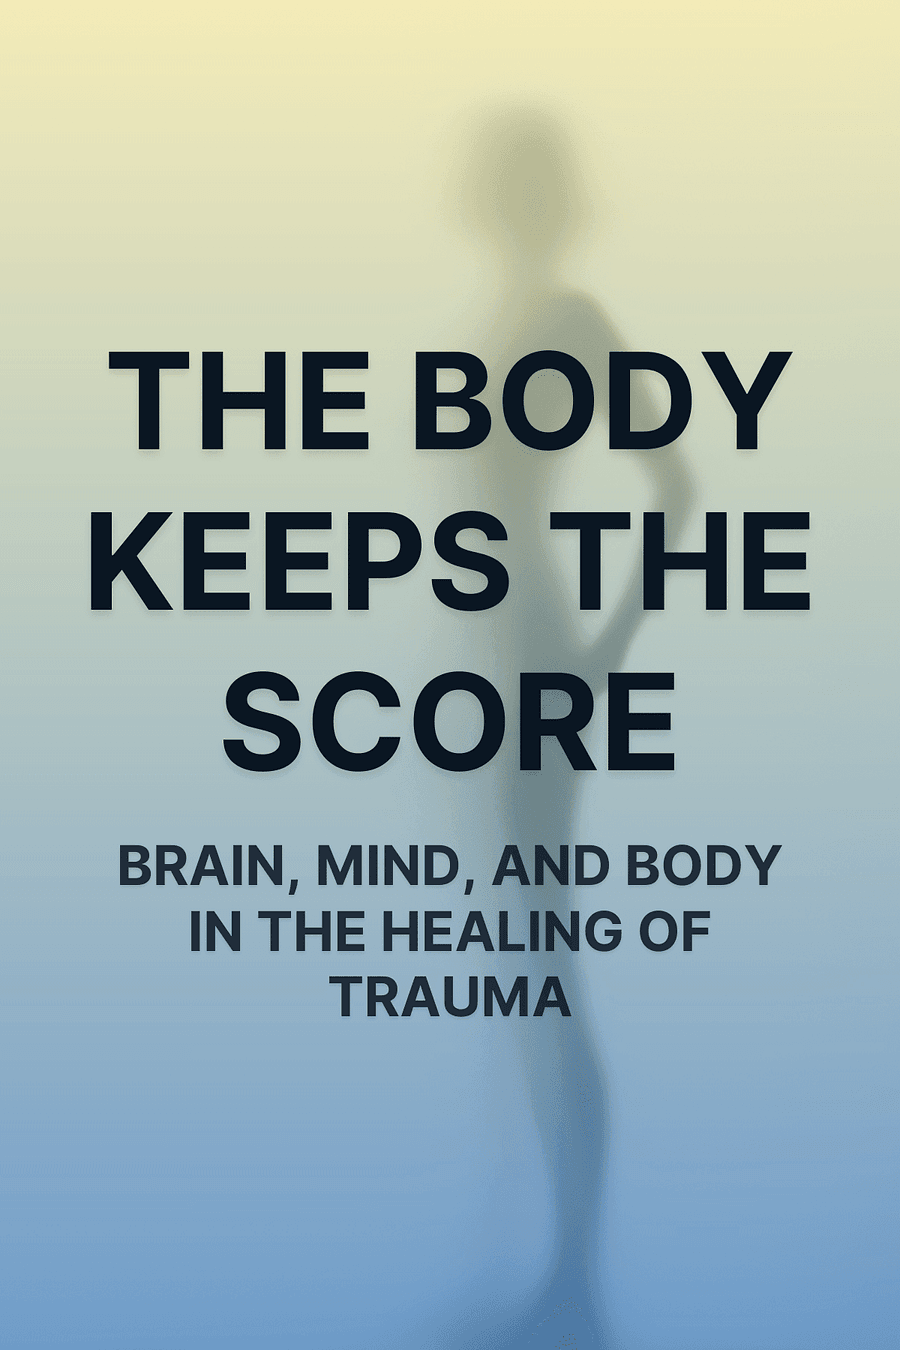 The Body Keeps the Score by Dr. Bessel van der Kolk - Book Summary